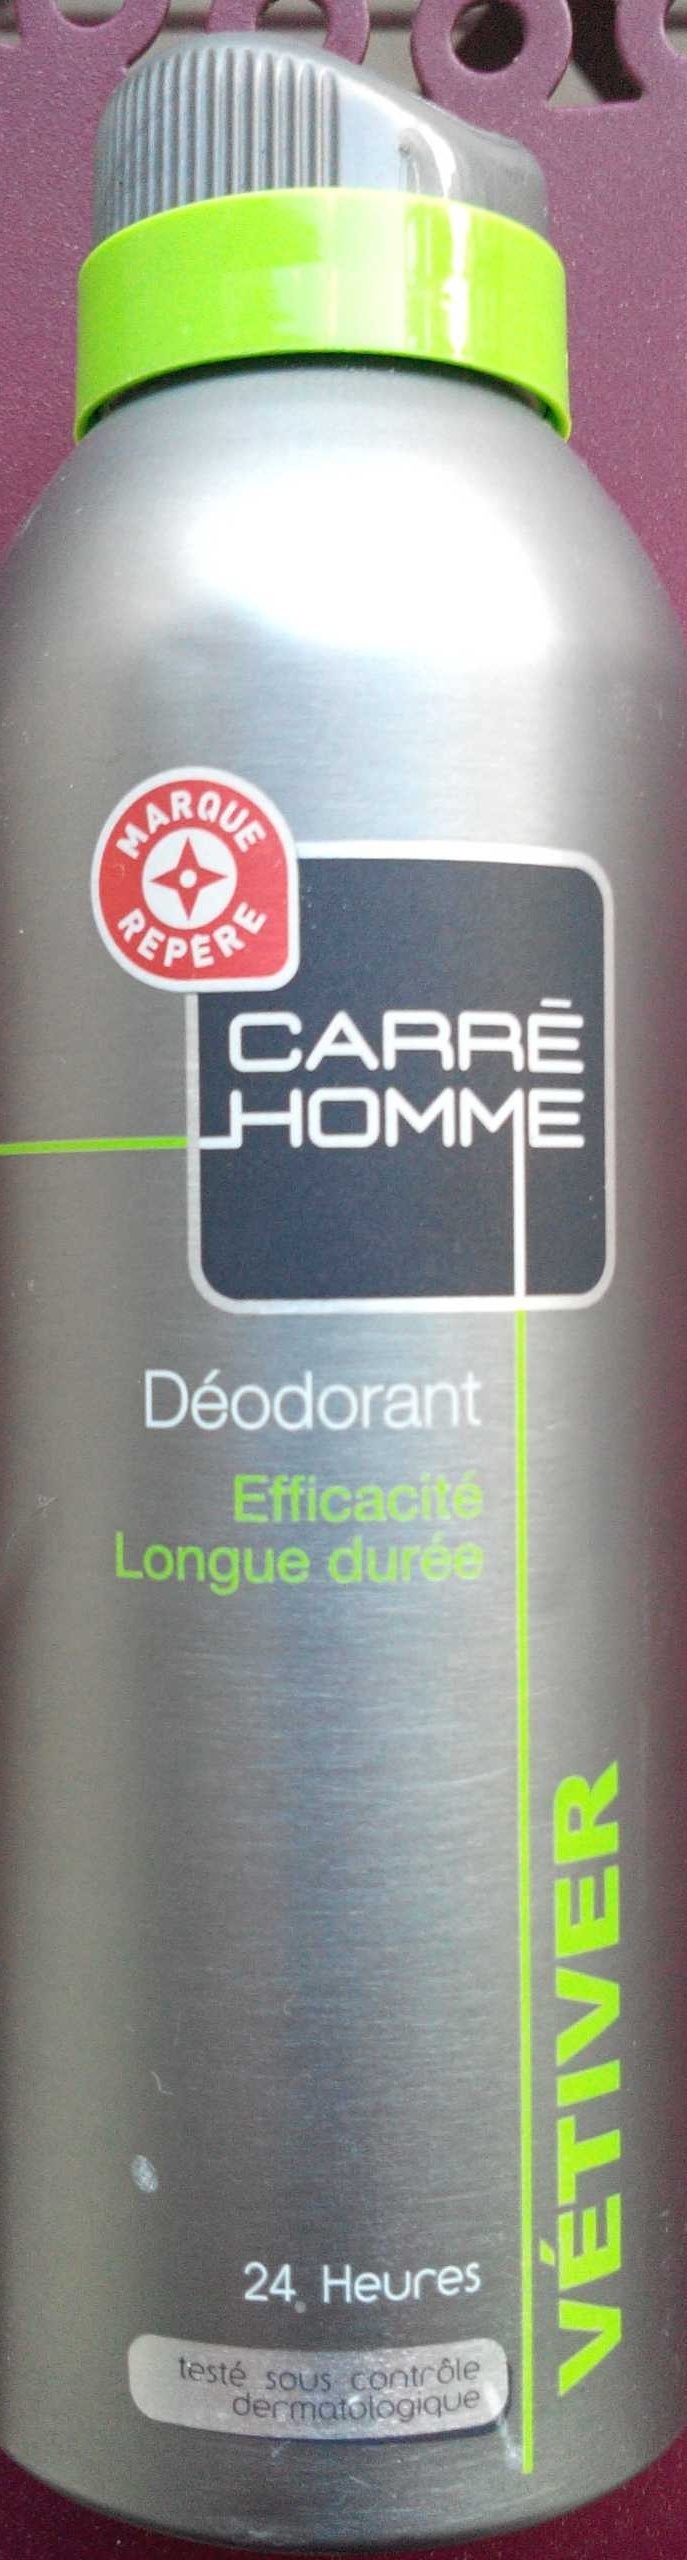 Déodorant Vétiver - Produkt - fr